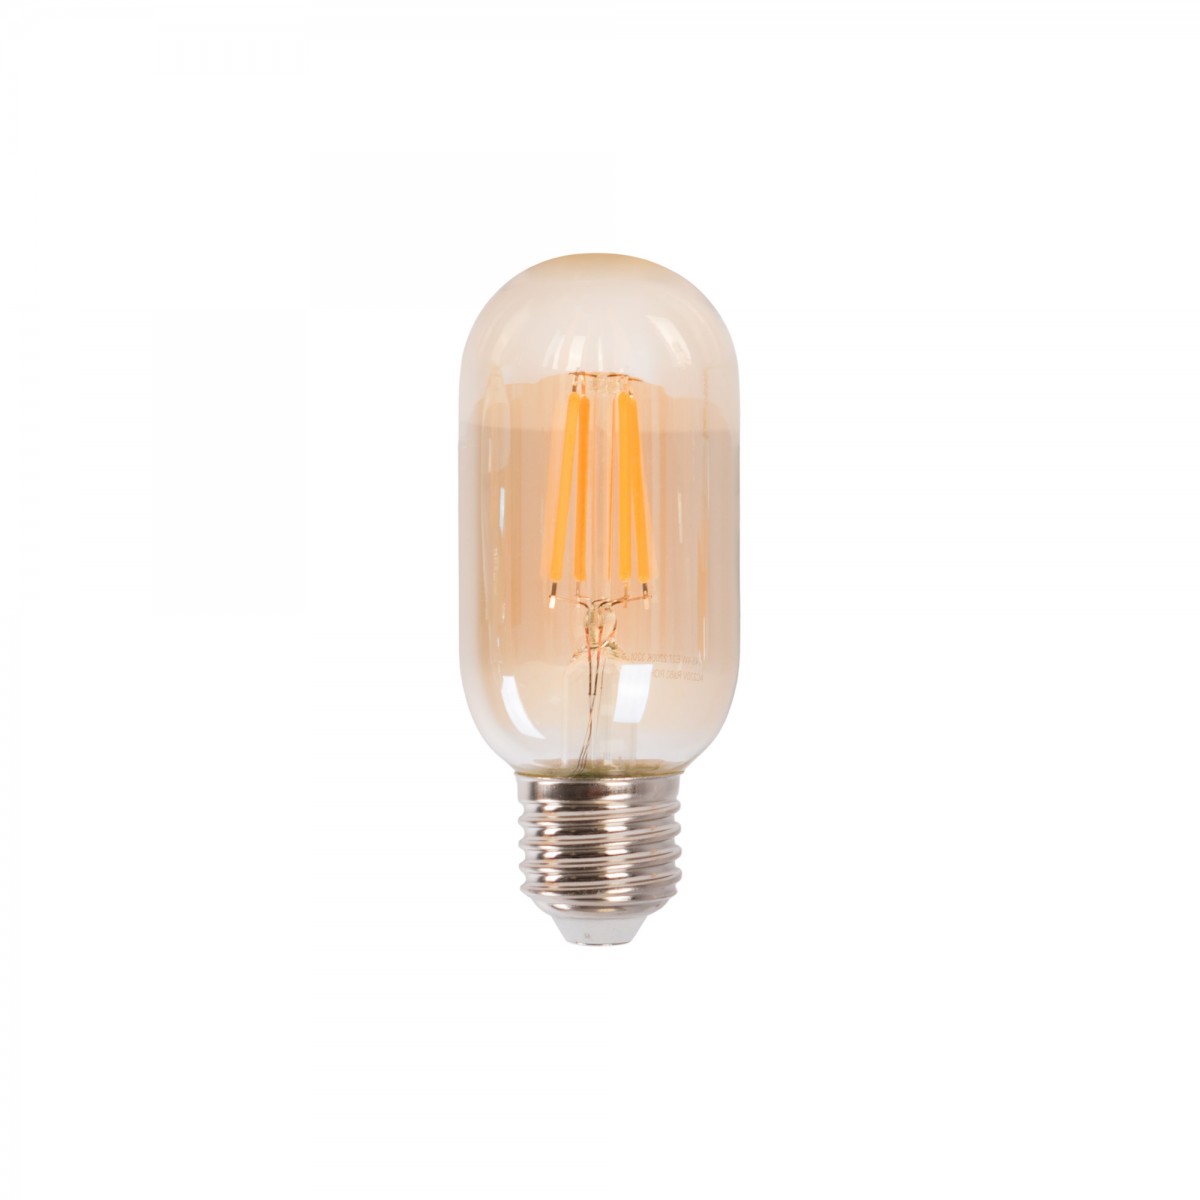 Lâmpada filamento LED E27 T45 - 4W - Vintage - 2200K